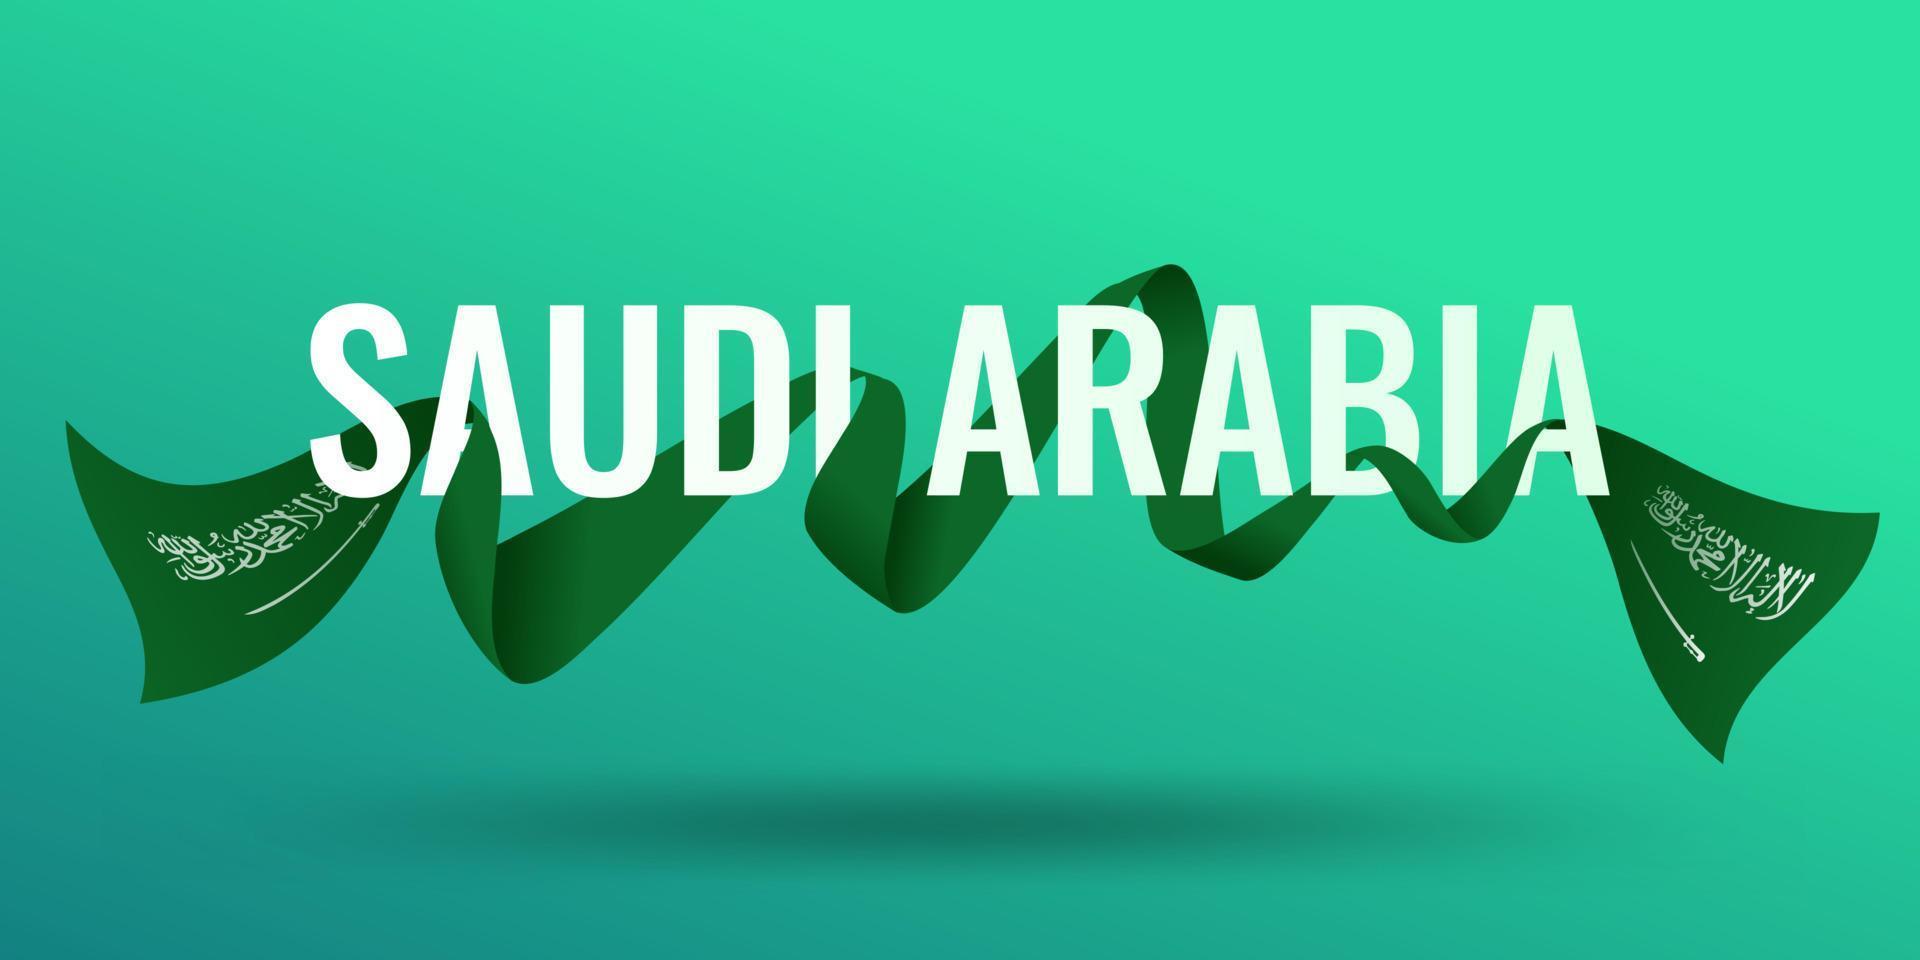 Saudi Arabia Decorated With Flag vector